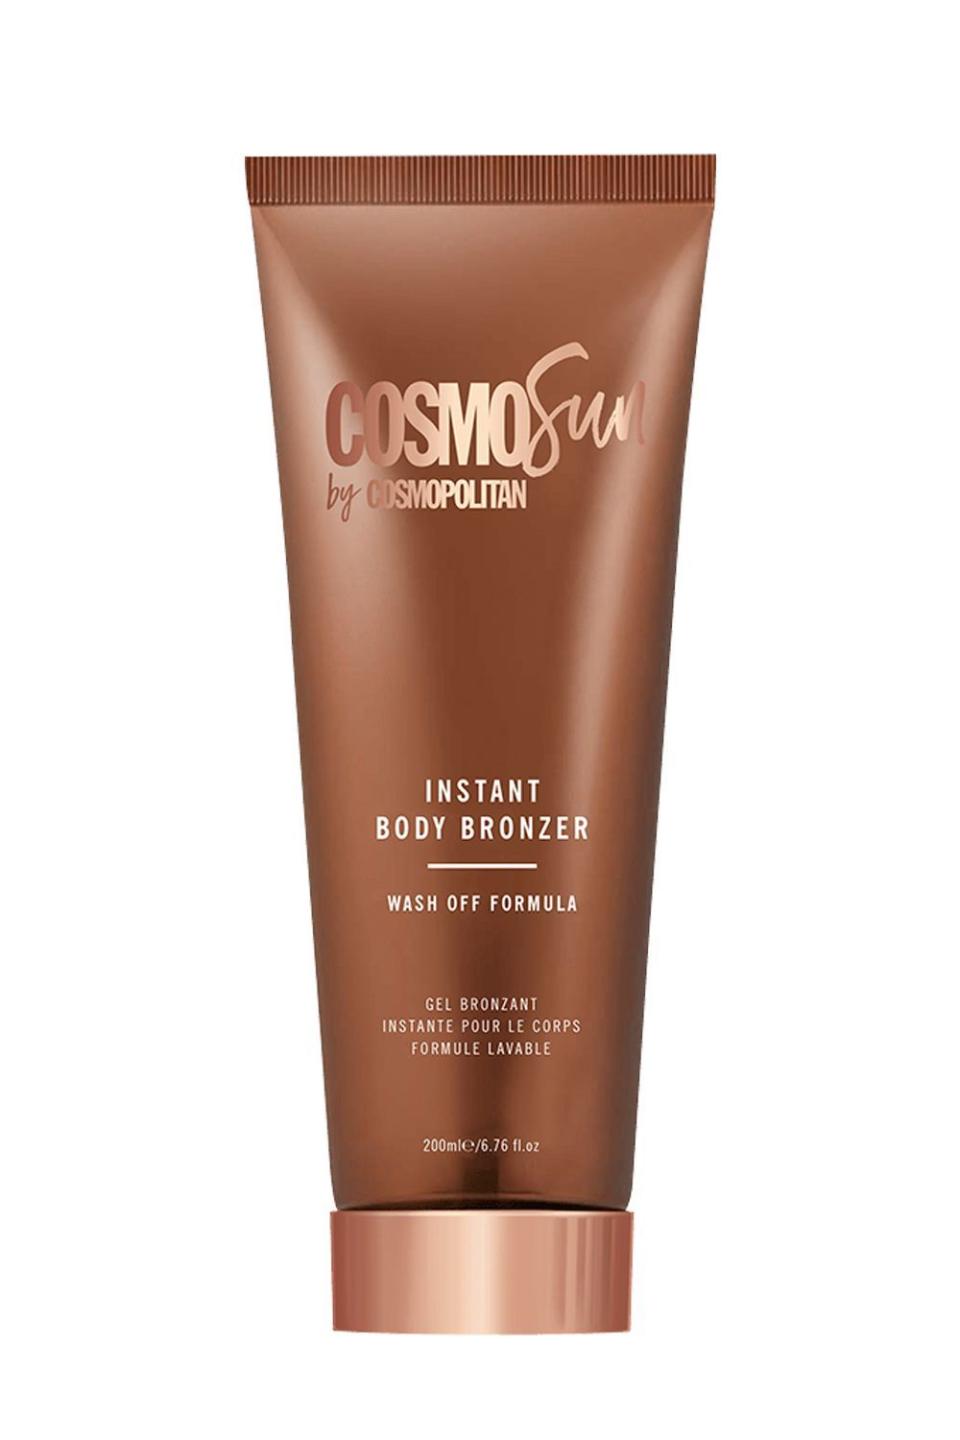 14) Cosmo Sun by Cosmopolitan Instant Body Bronzer